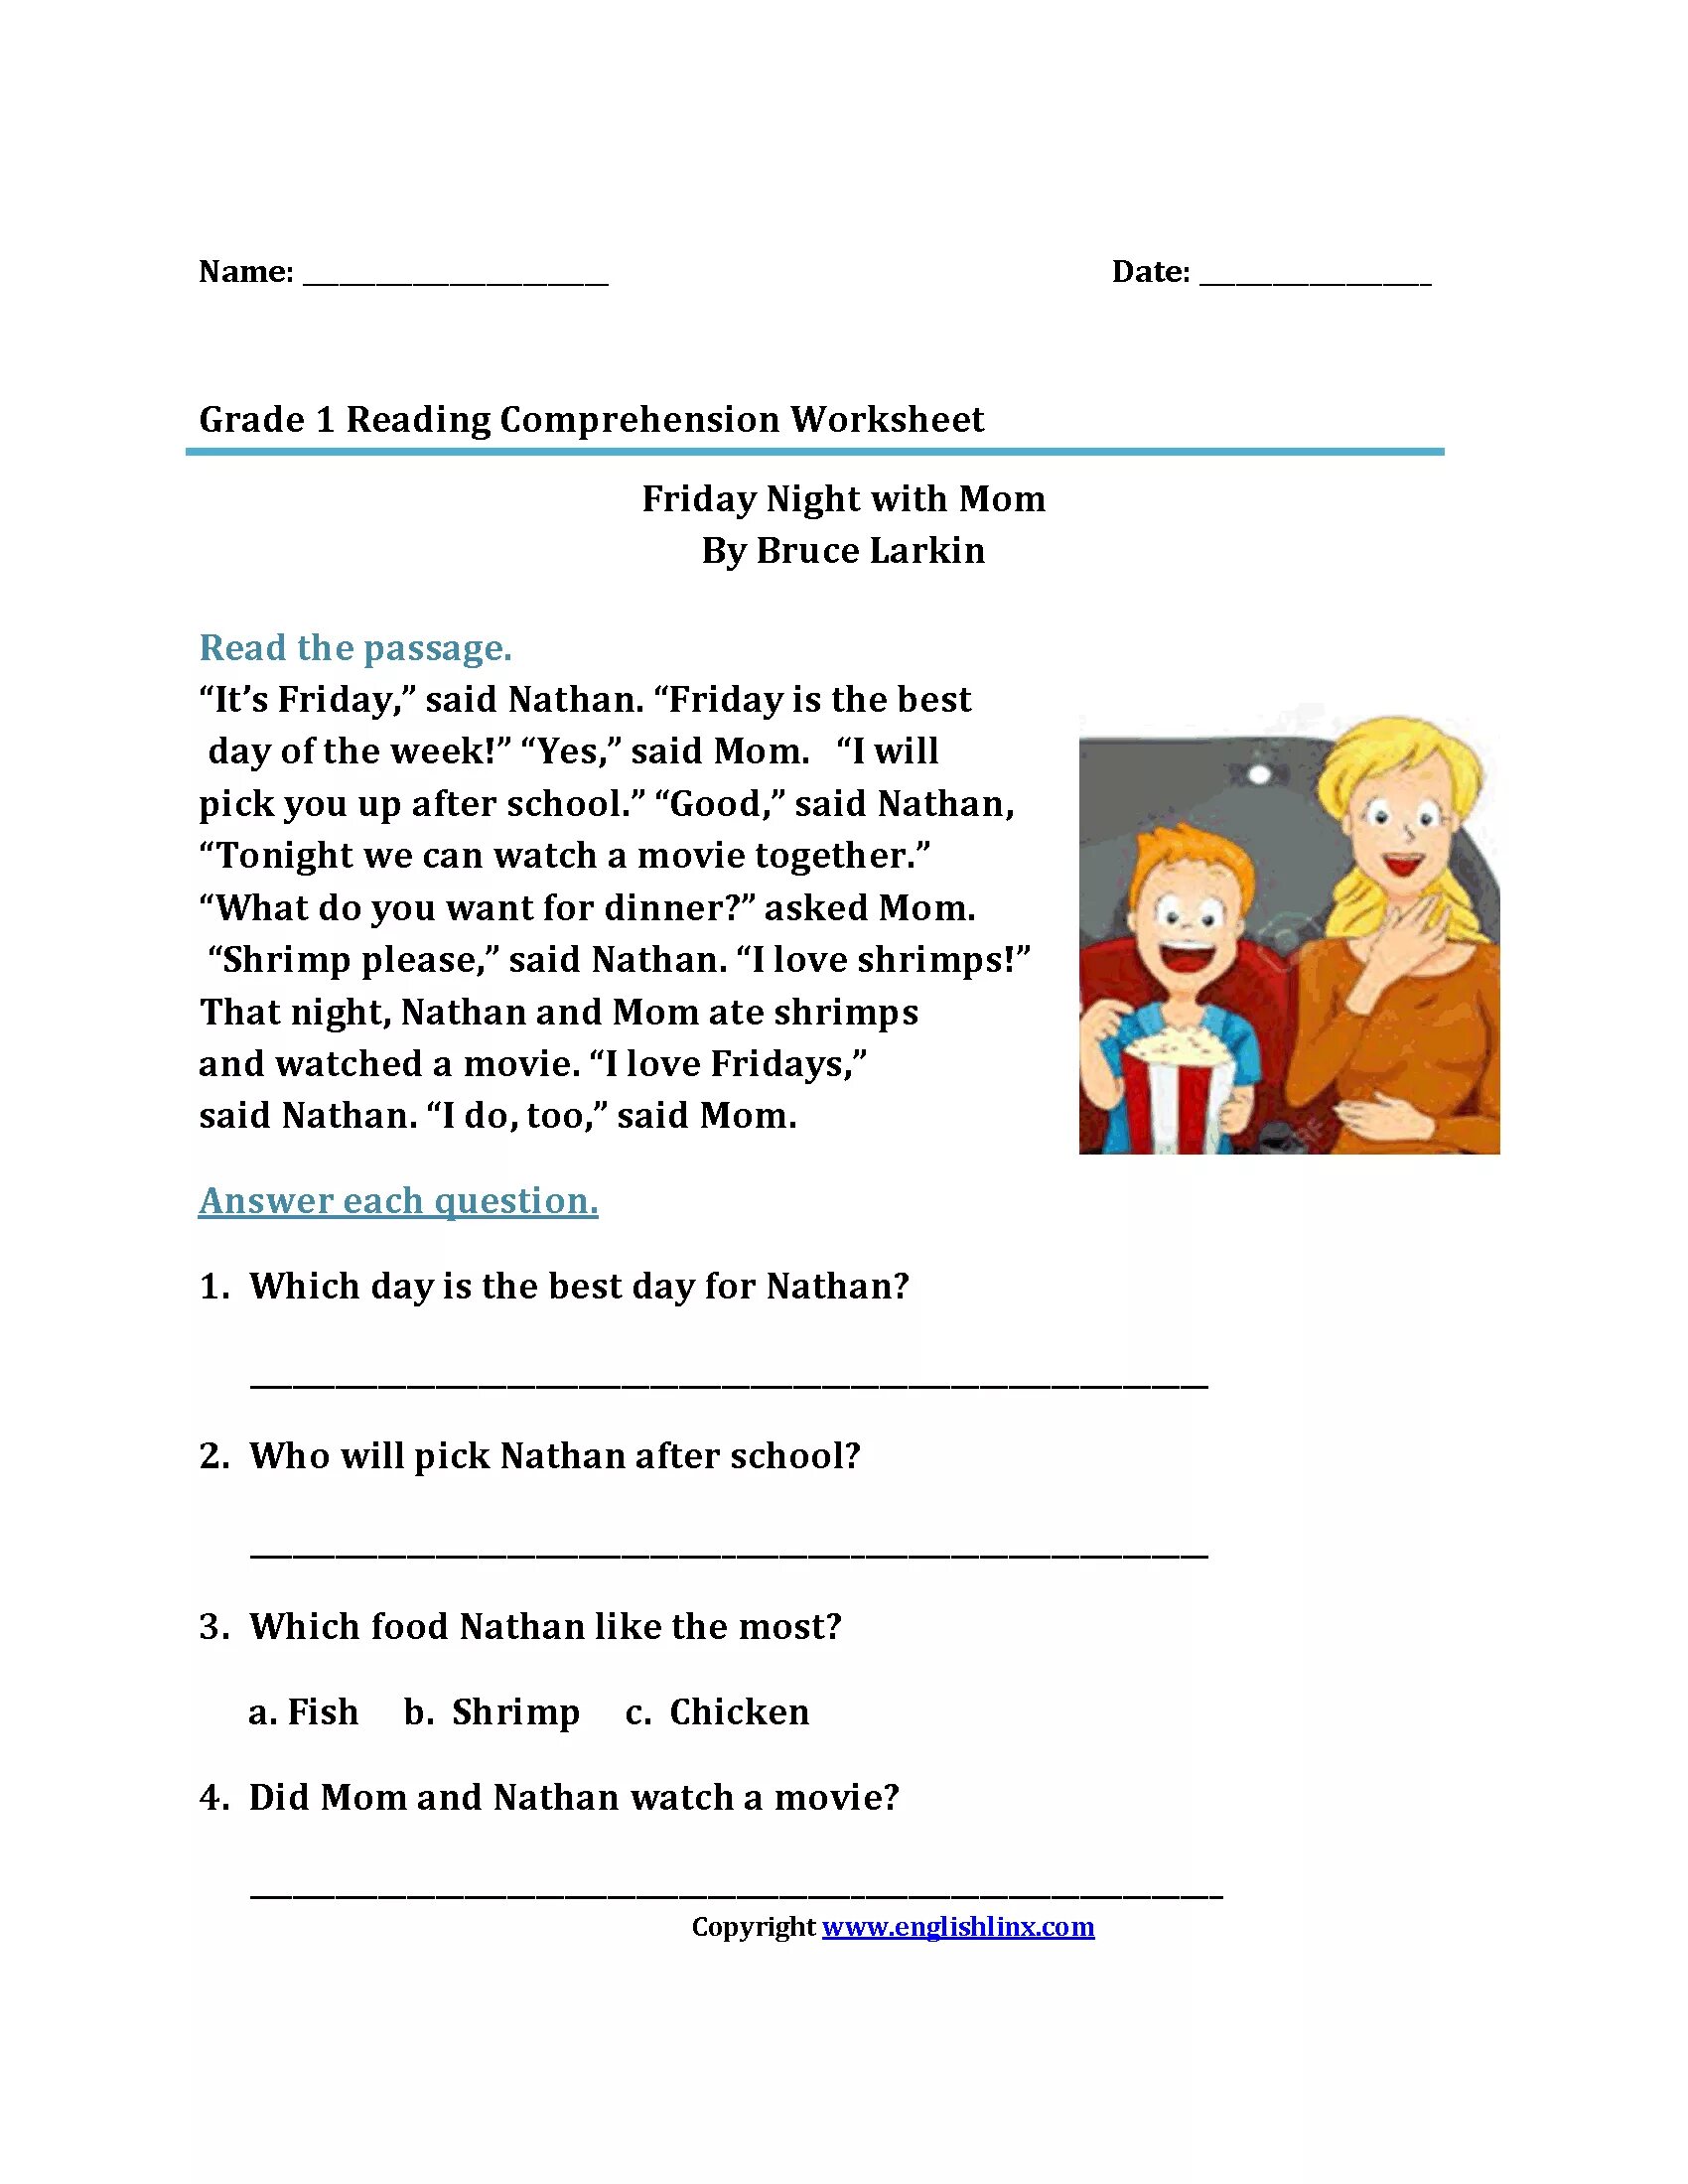 Reading Comprehension Worksheets. Reading Comprehension for 5th Grade. Worksheets for 1 Grades reading Comprehension. Reading skills Worksheets.